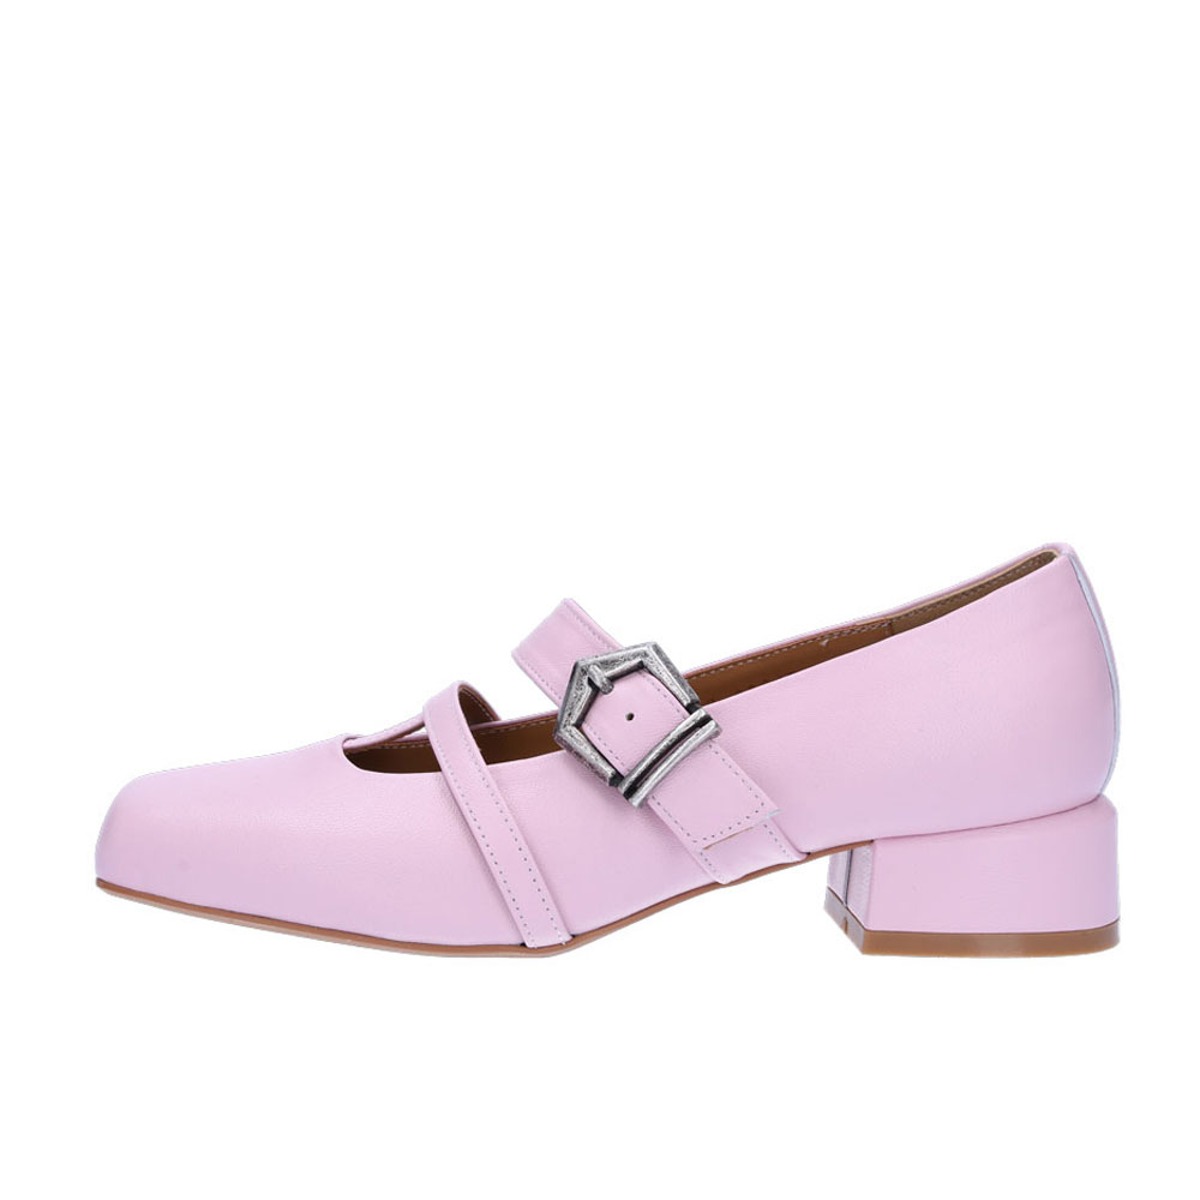 AKU maryjane loafers (pink)